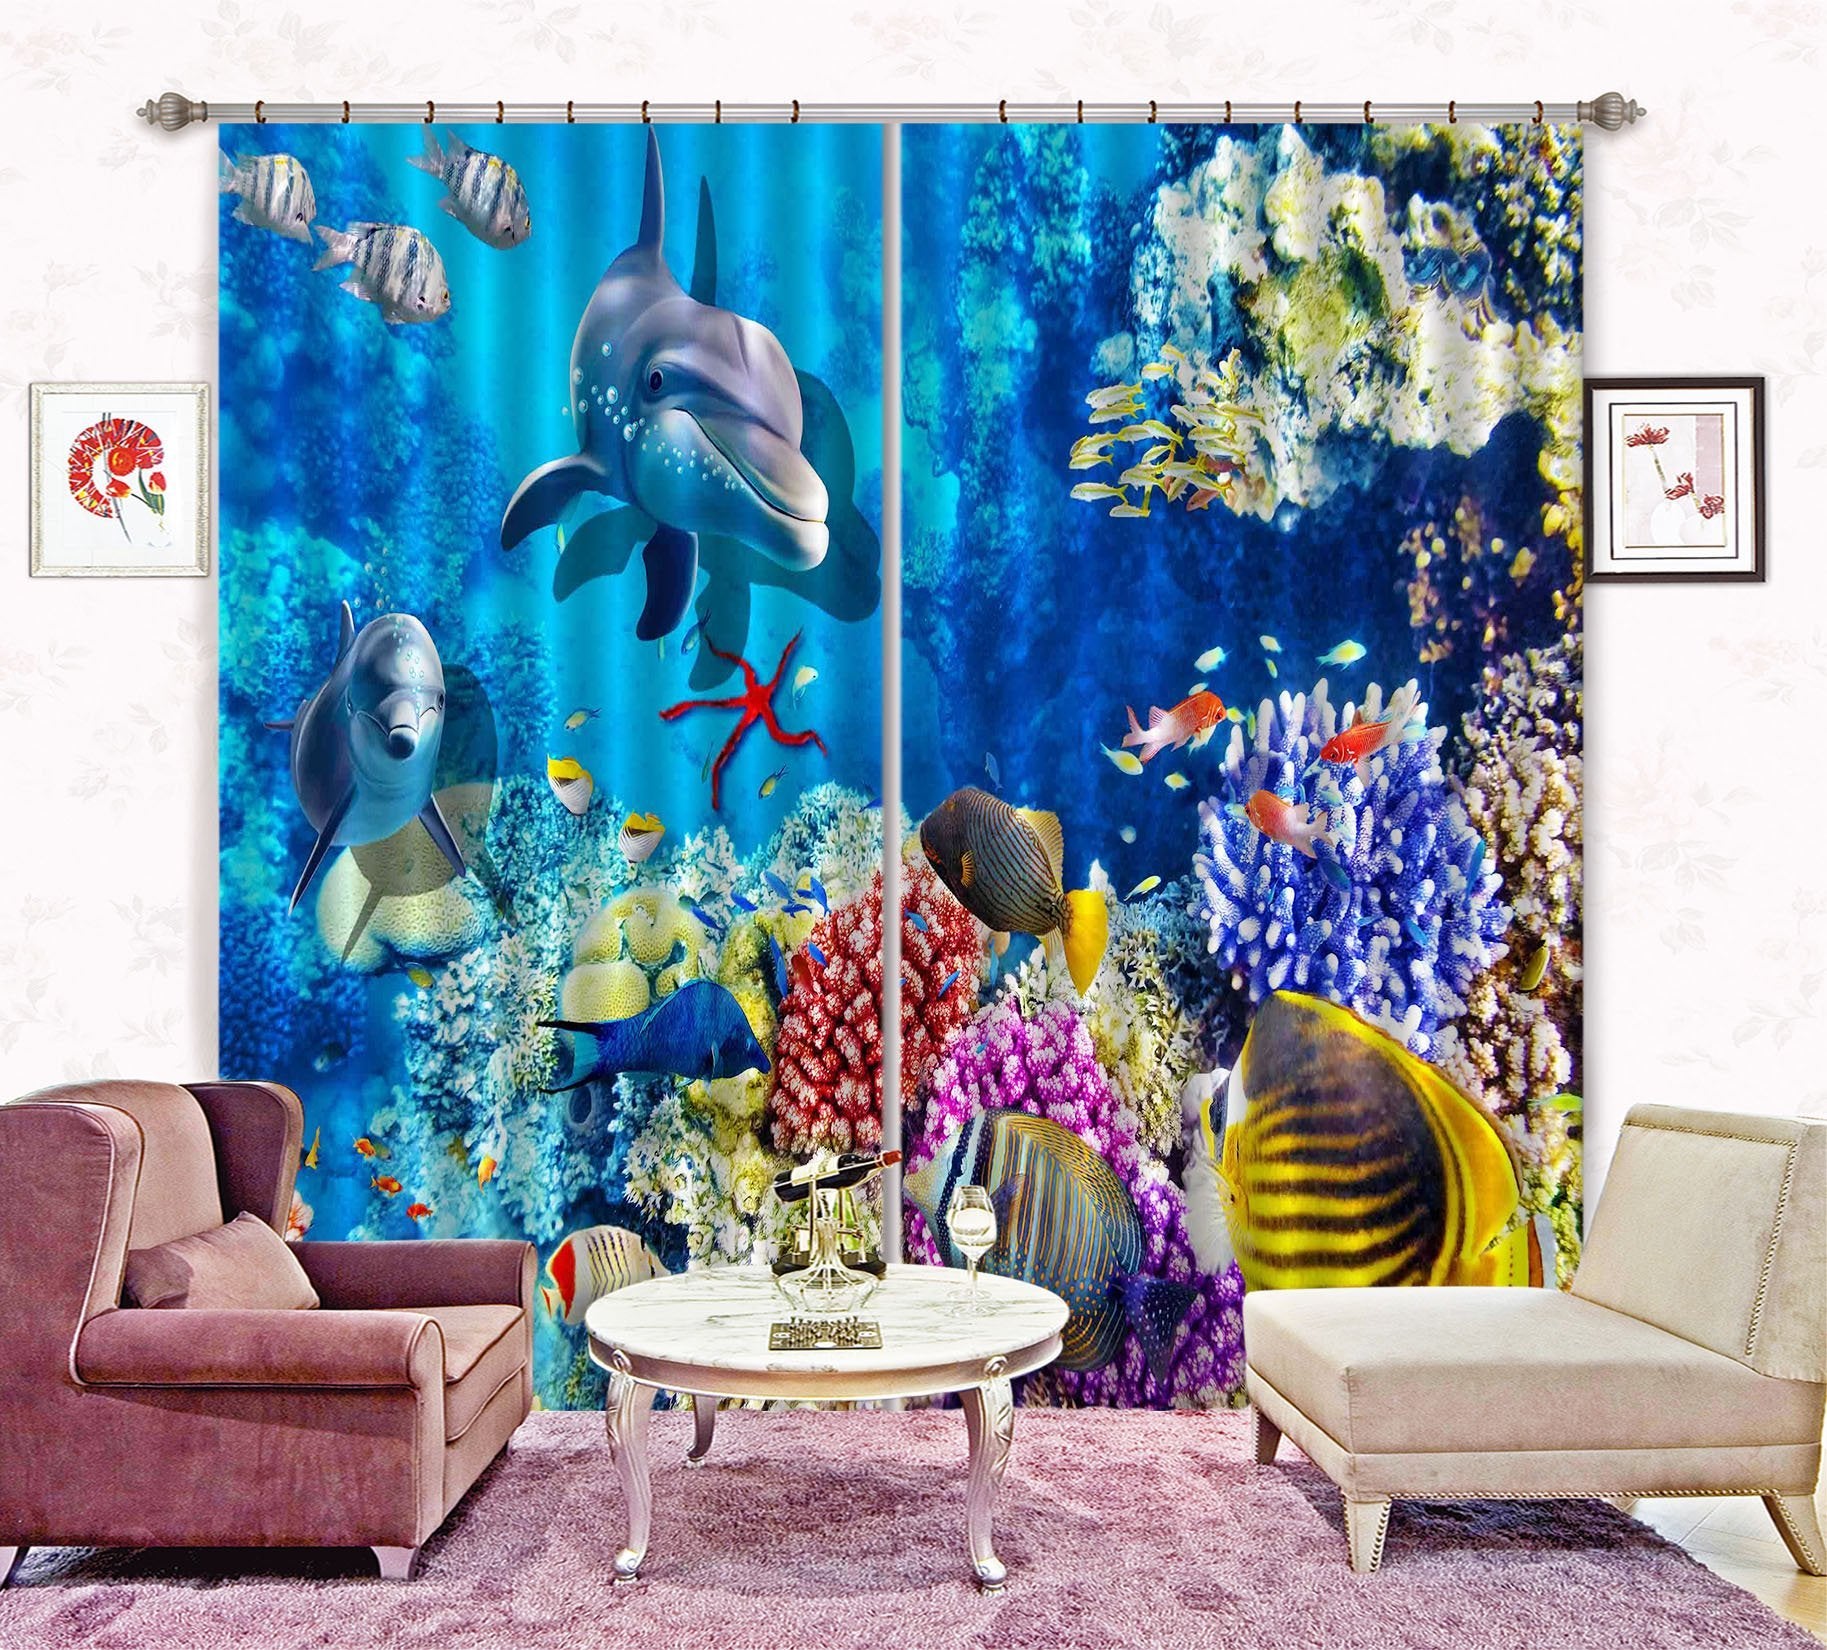 3D Bright Ocean World 2262 Curtains Drapes Wallpaper AJ Wallpaper 